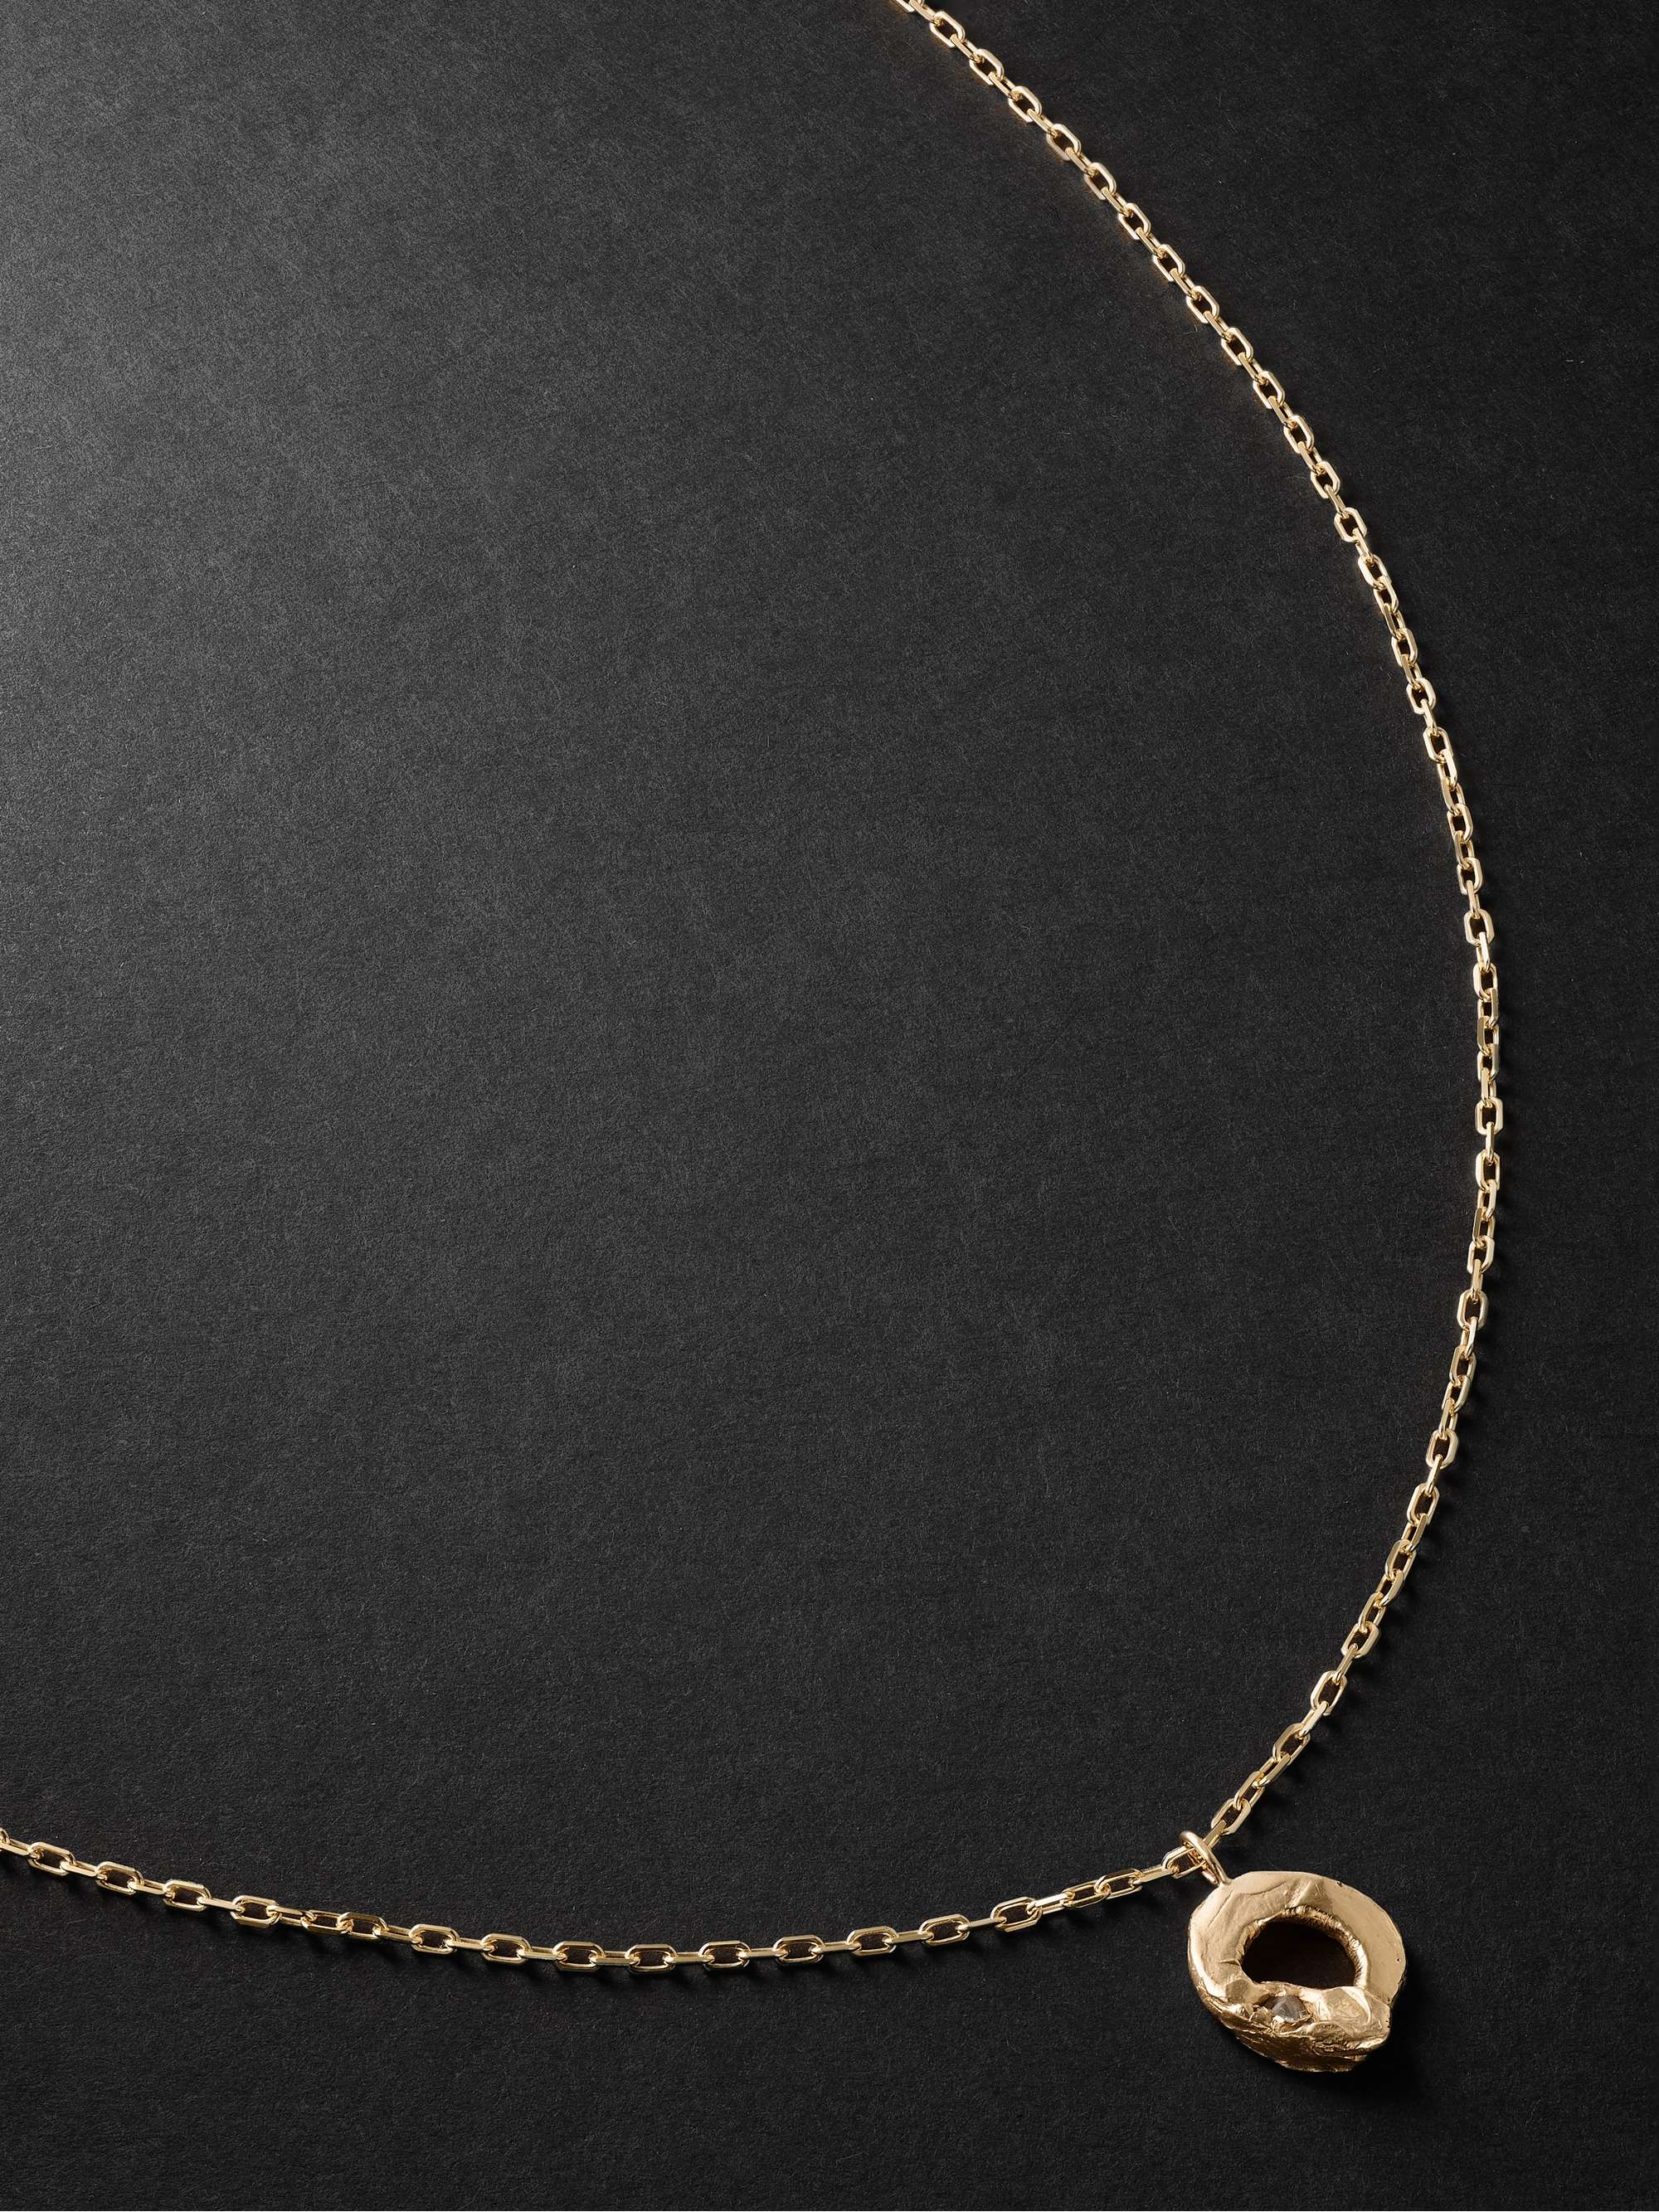 ALICE MADE THIS + Ocean Diamonds Wallace 9-Karat Gold Diamond Pendant Necklace